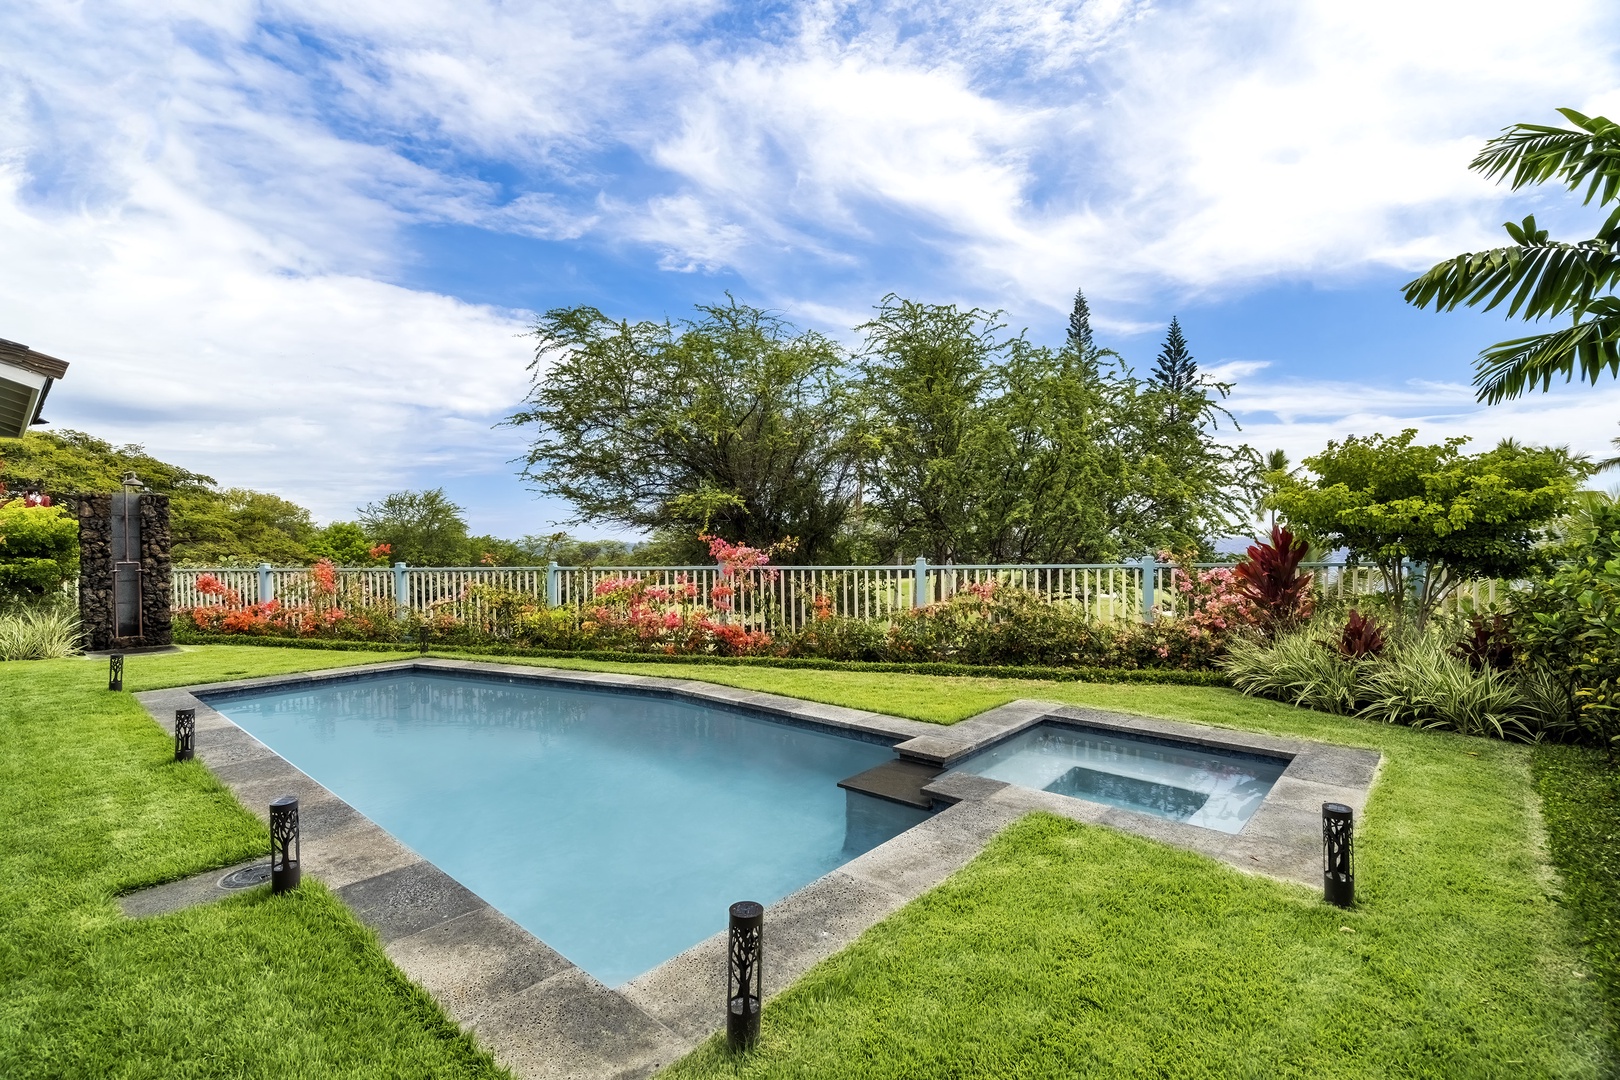 Kailua Kona Vacation Rentals, Green/Blue Combo - Salt water pool and spa!